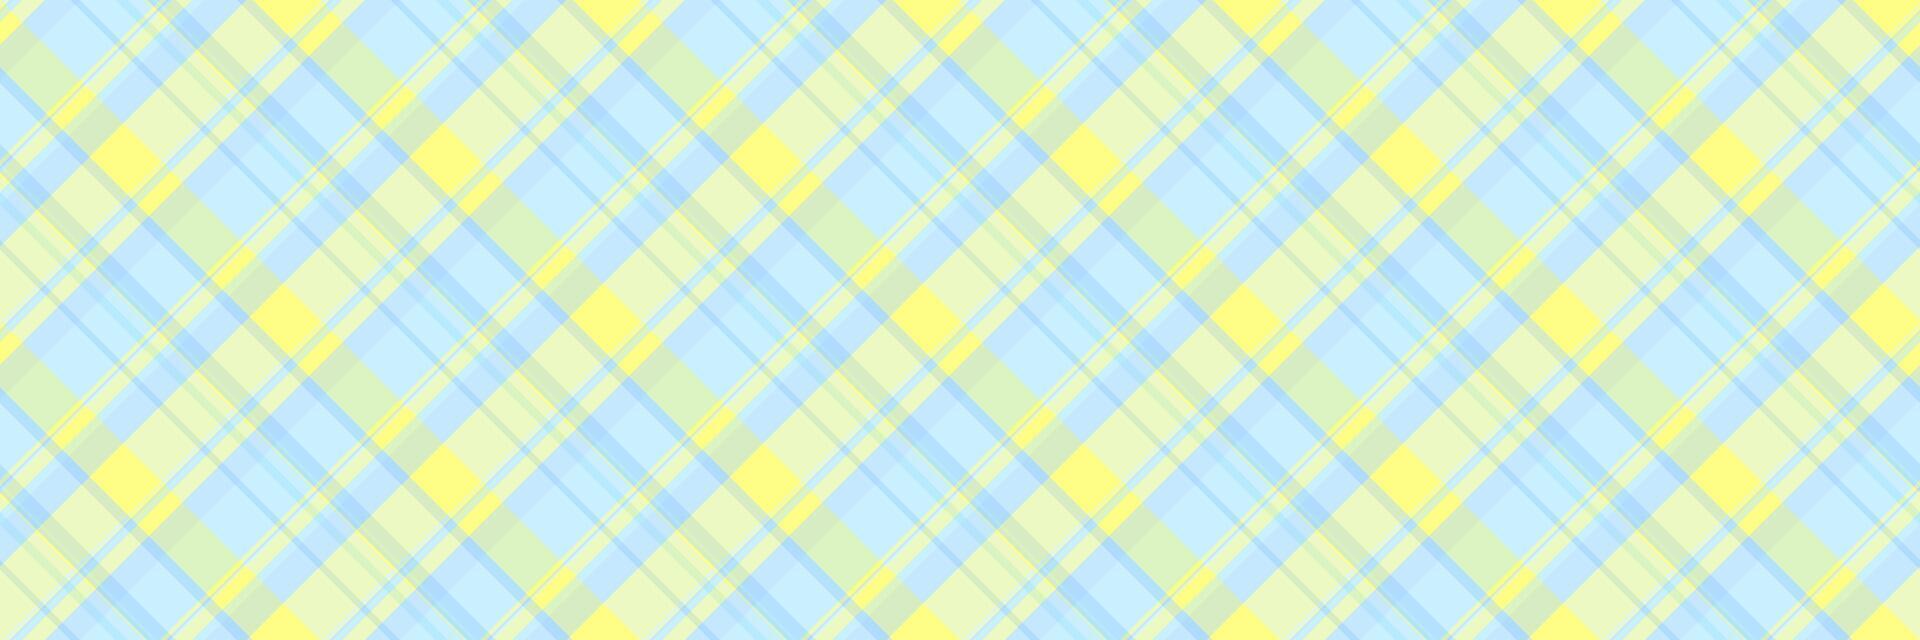 retângulo padronizar Verifica desatado, contemporâneo textura têxtil tartan. formal xadrez tecido fundo dentro luz e amarelo cores. vetor